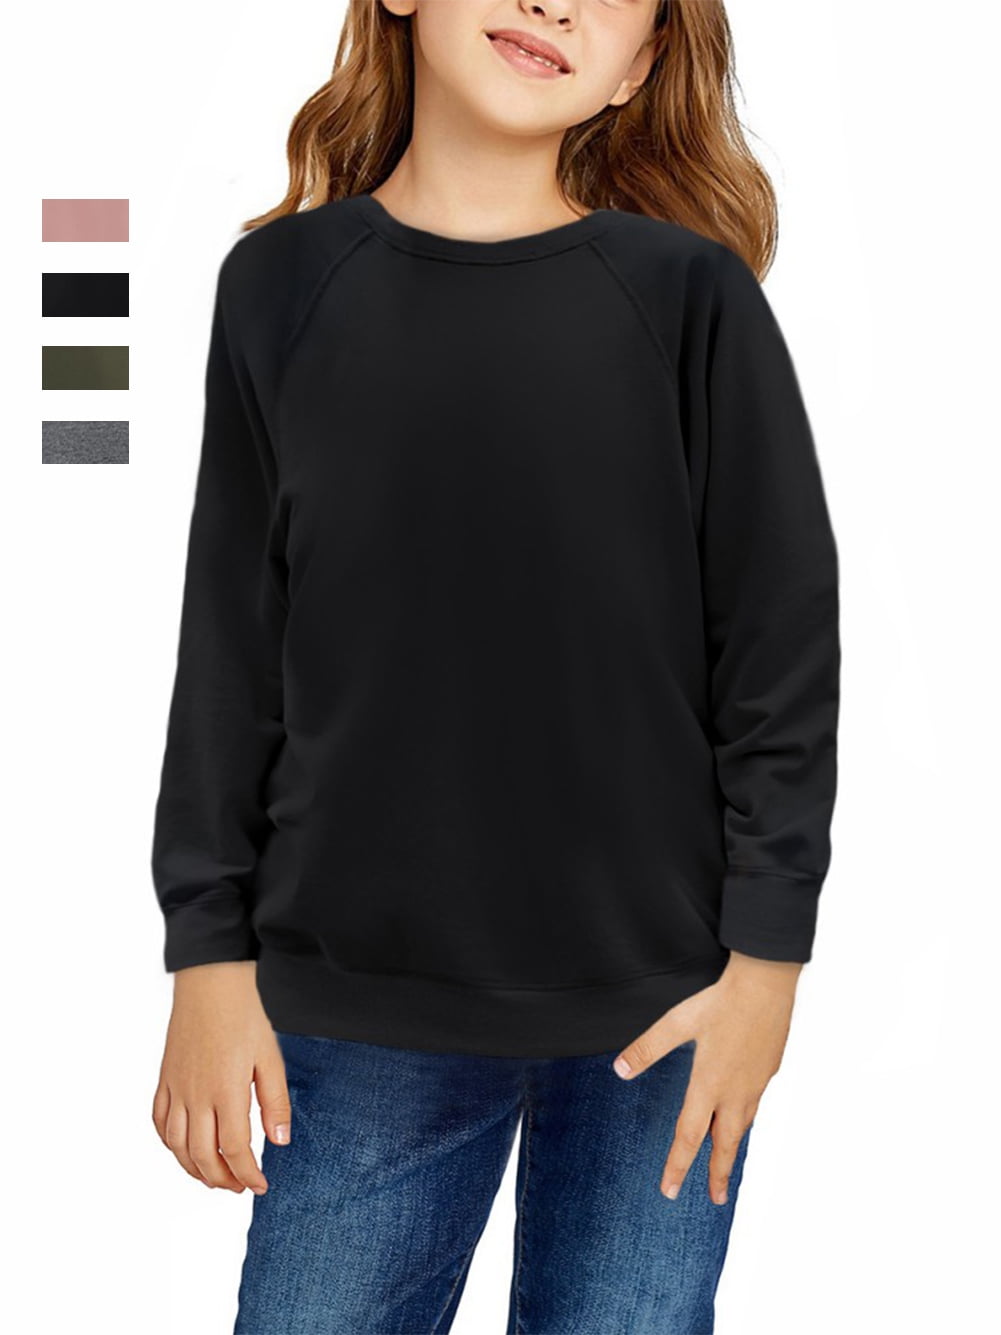 URMAGIC Kid Big Girls Long Sleeve Pullover Sweater Tops - Walmart.com